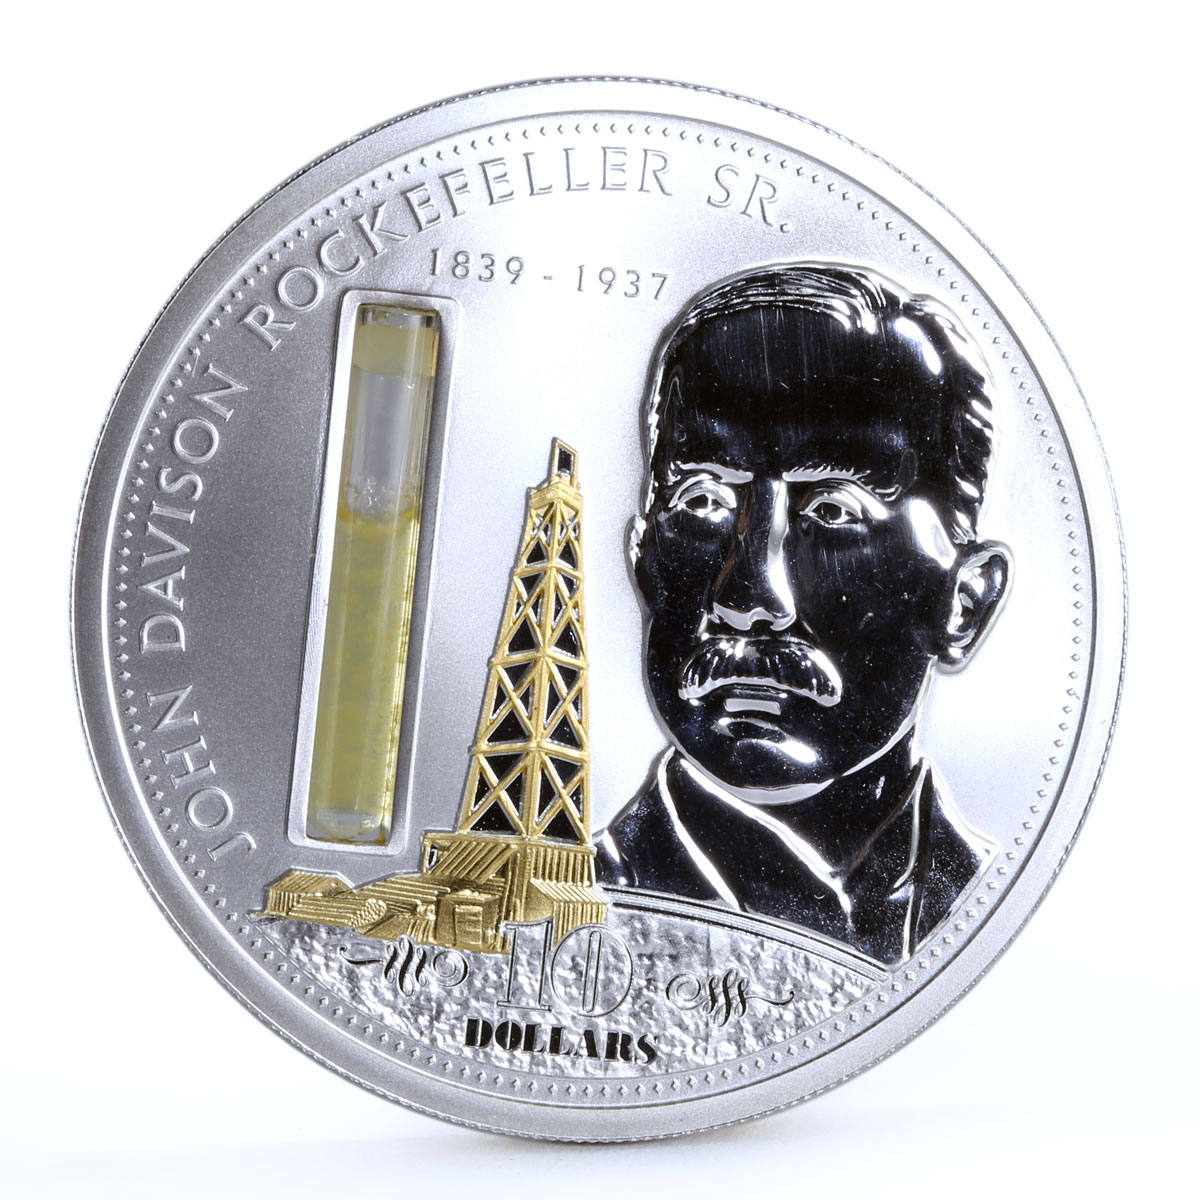 Cook Island 10 dollars Sir John Davidson Rockefeller Oil proof silver coin 2008